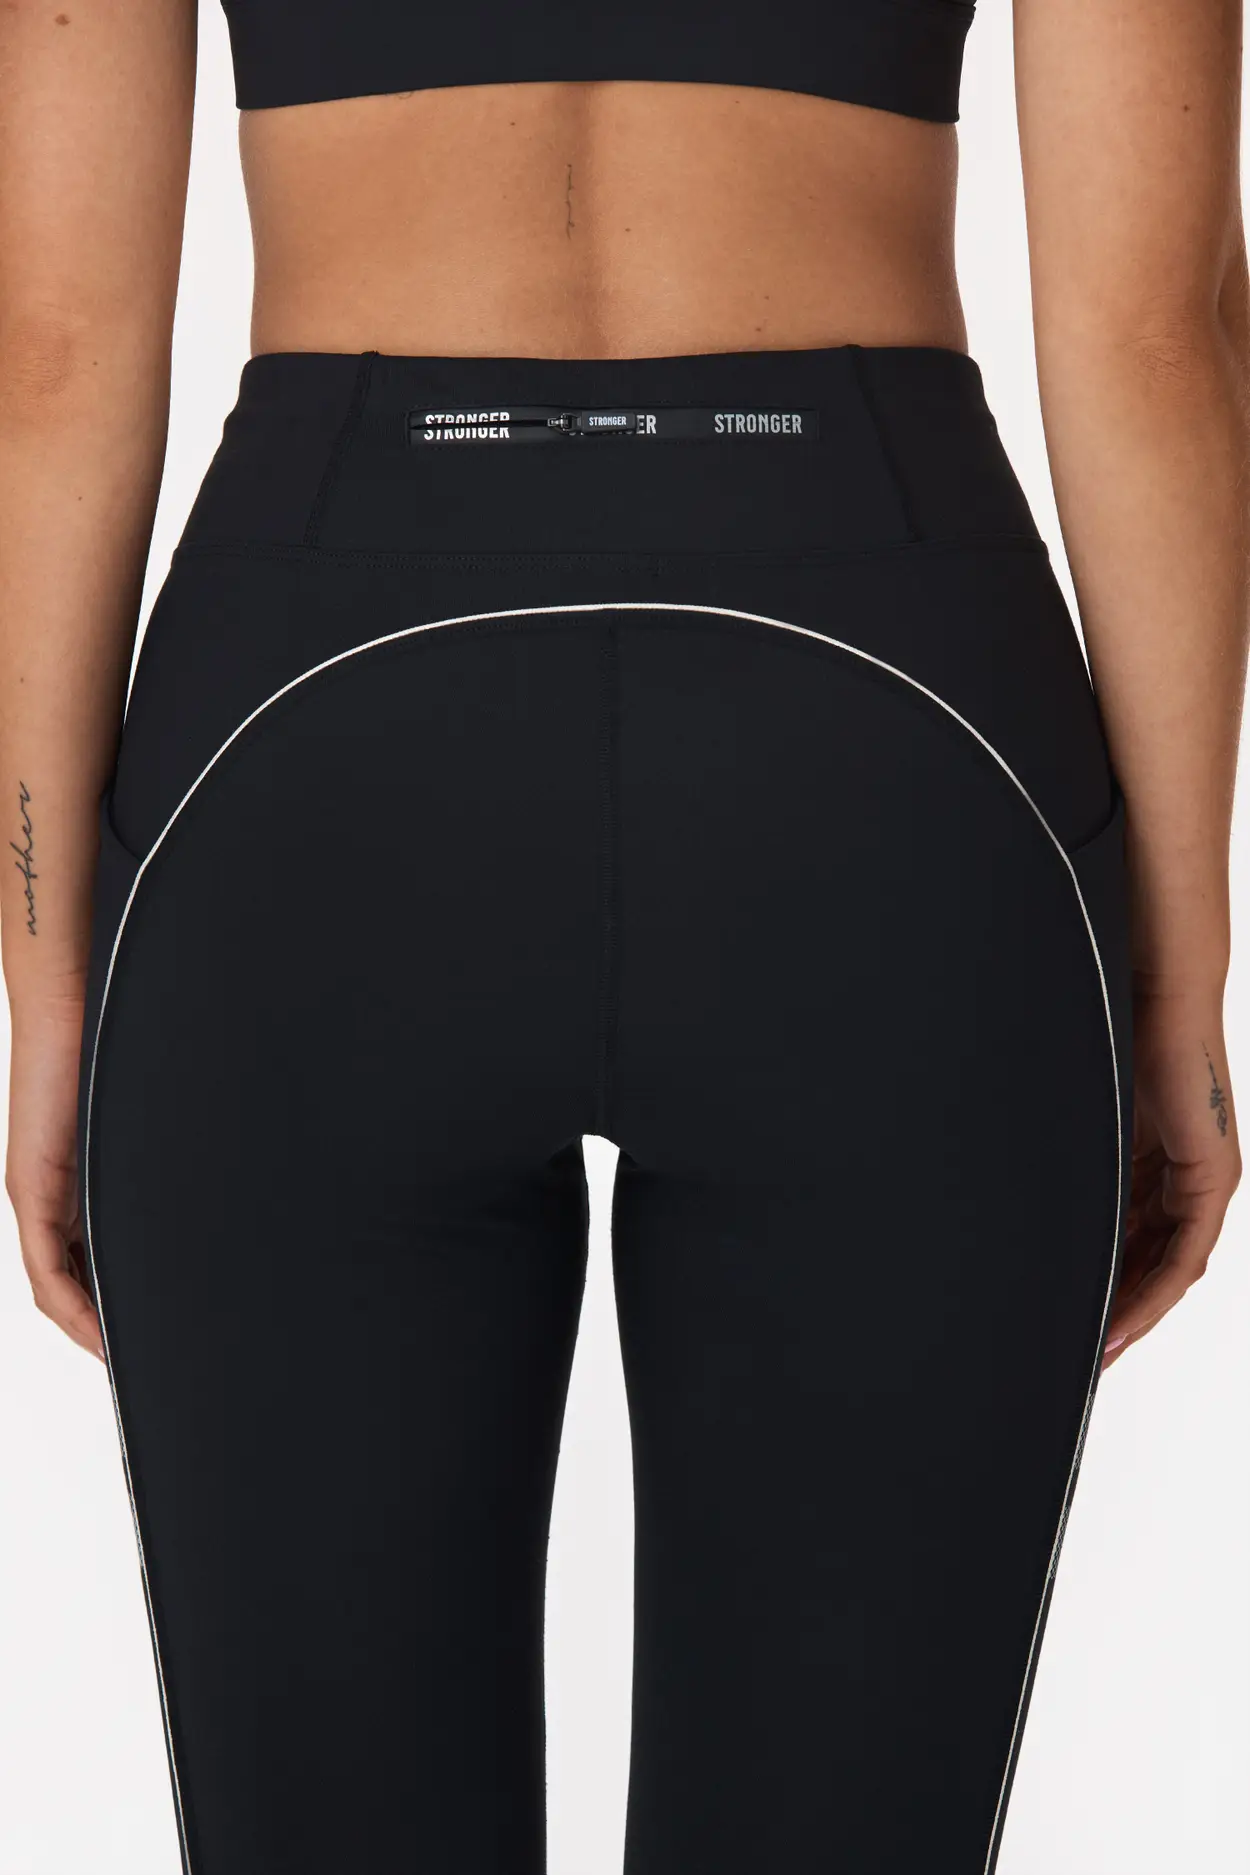 Elastic thermal leggings curvy in black, 6.99€